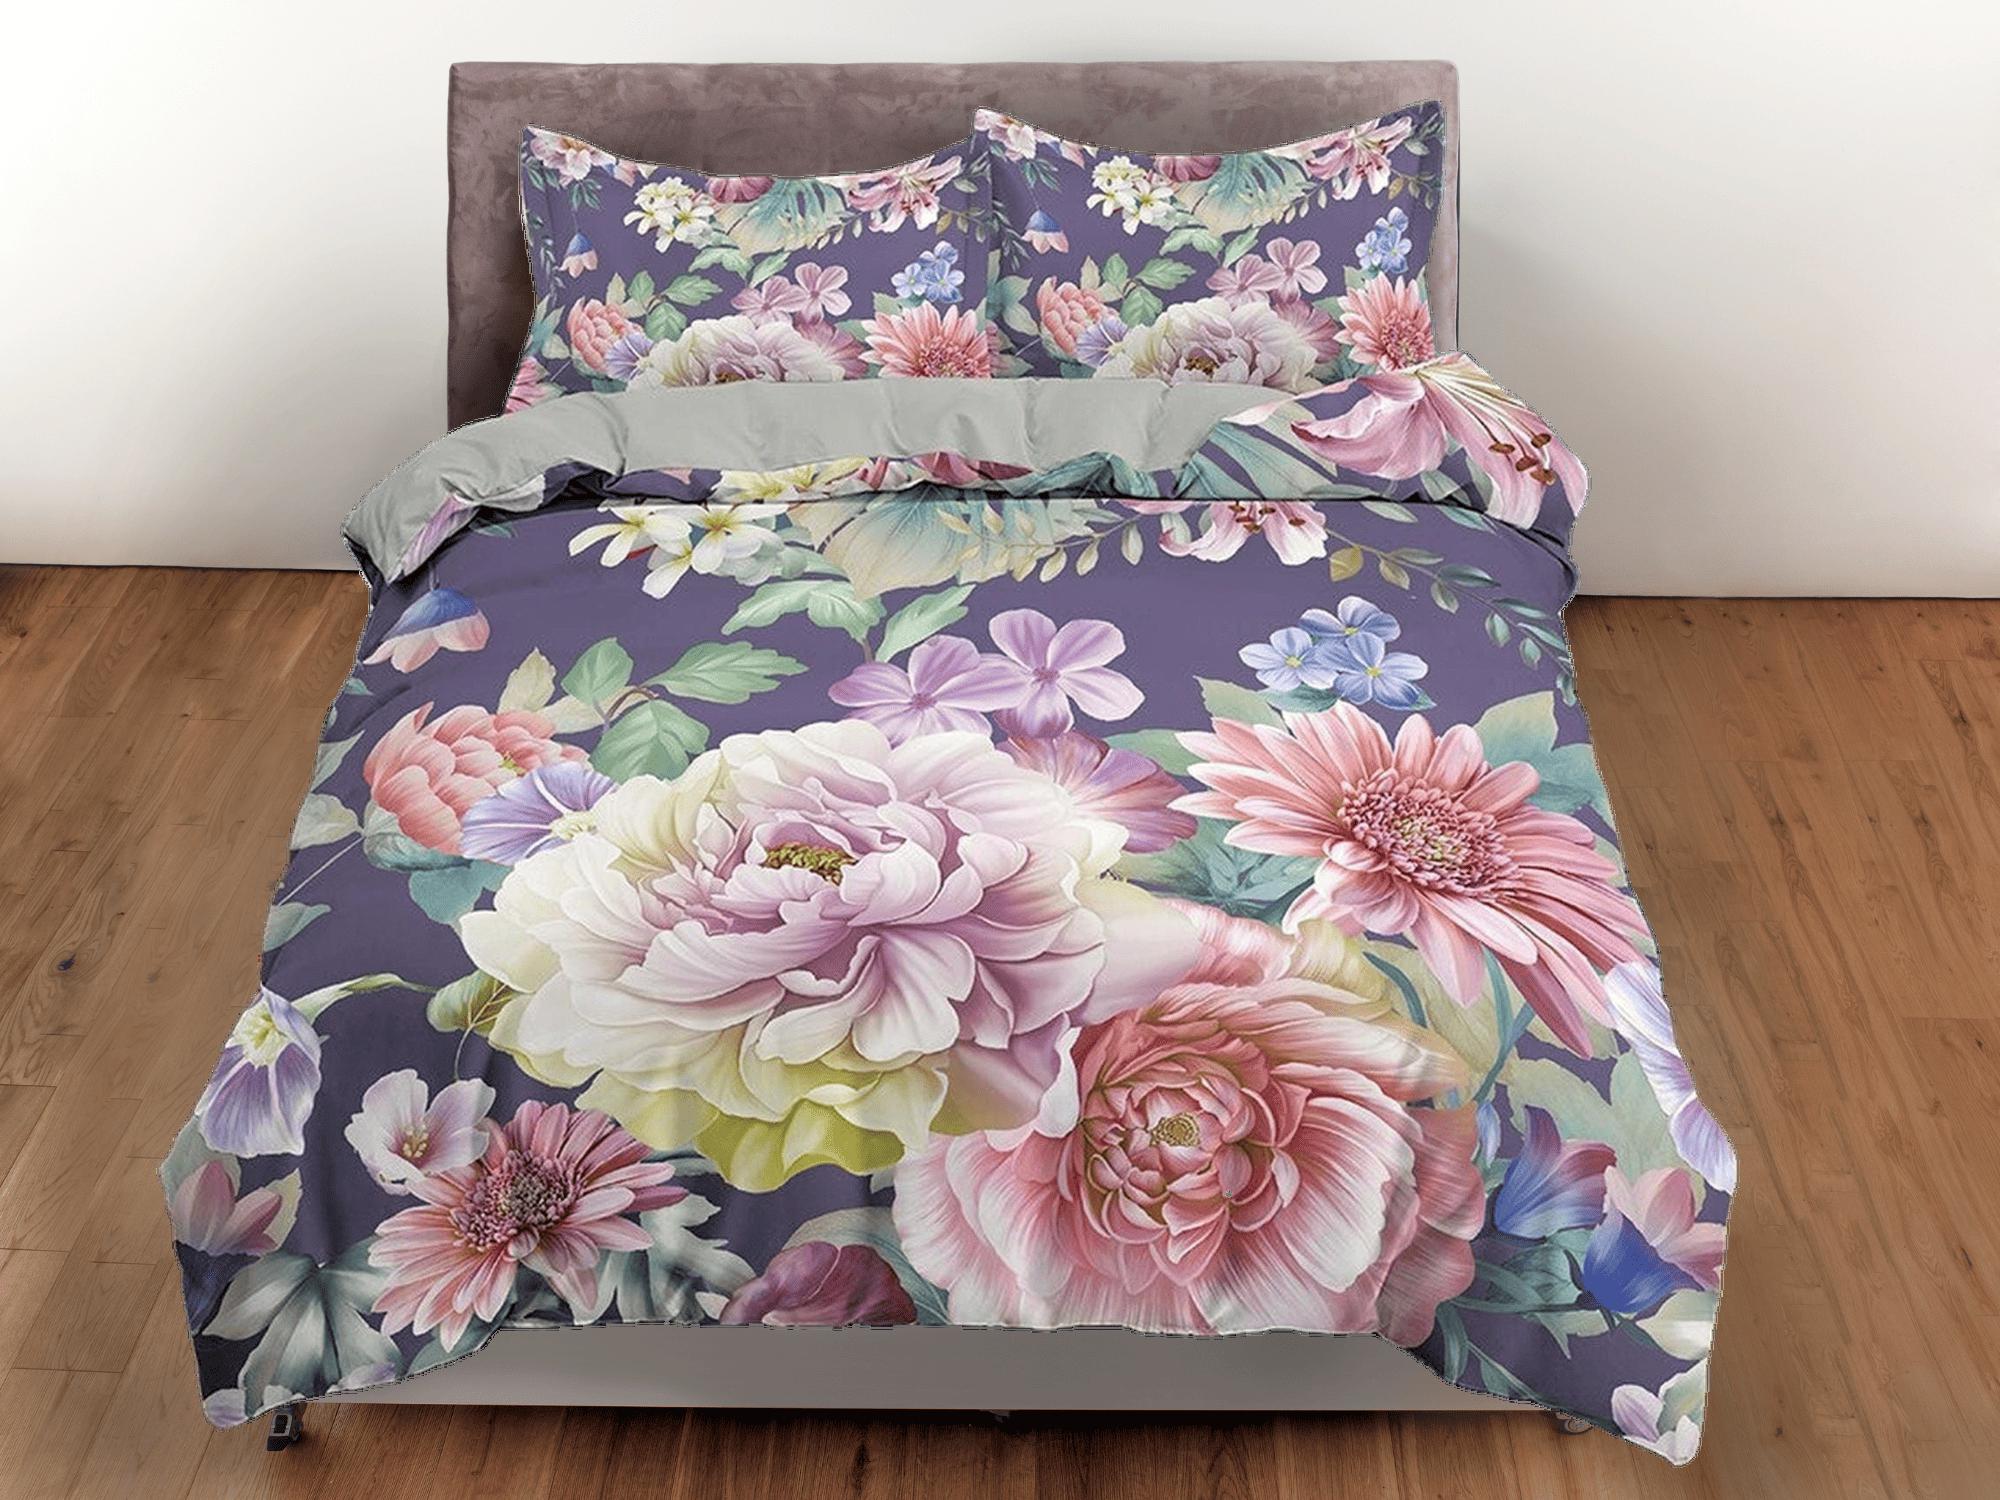 daintyduvet Purple shabby chic bedding floral duvet cover, pink roses, teen girl bedroom, baby girl crib bedding boho maximalist bedspread aesthetic